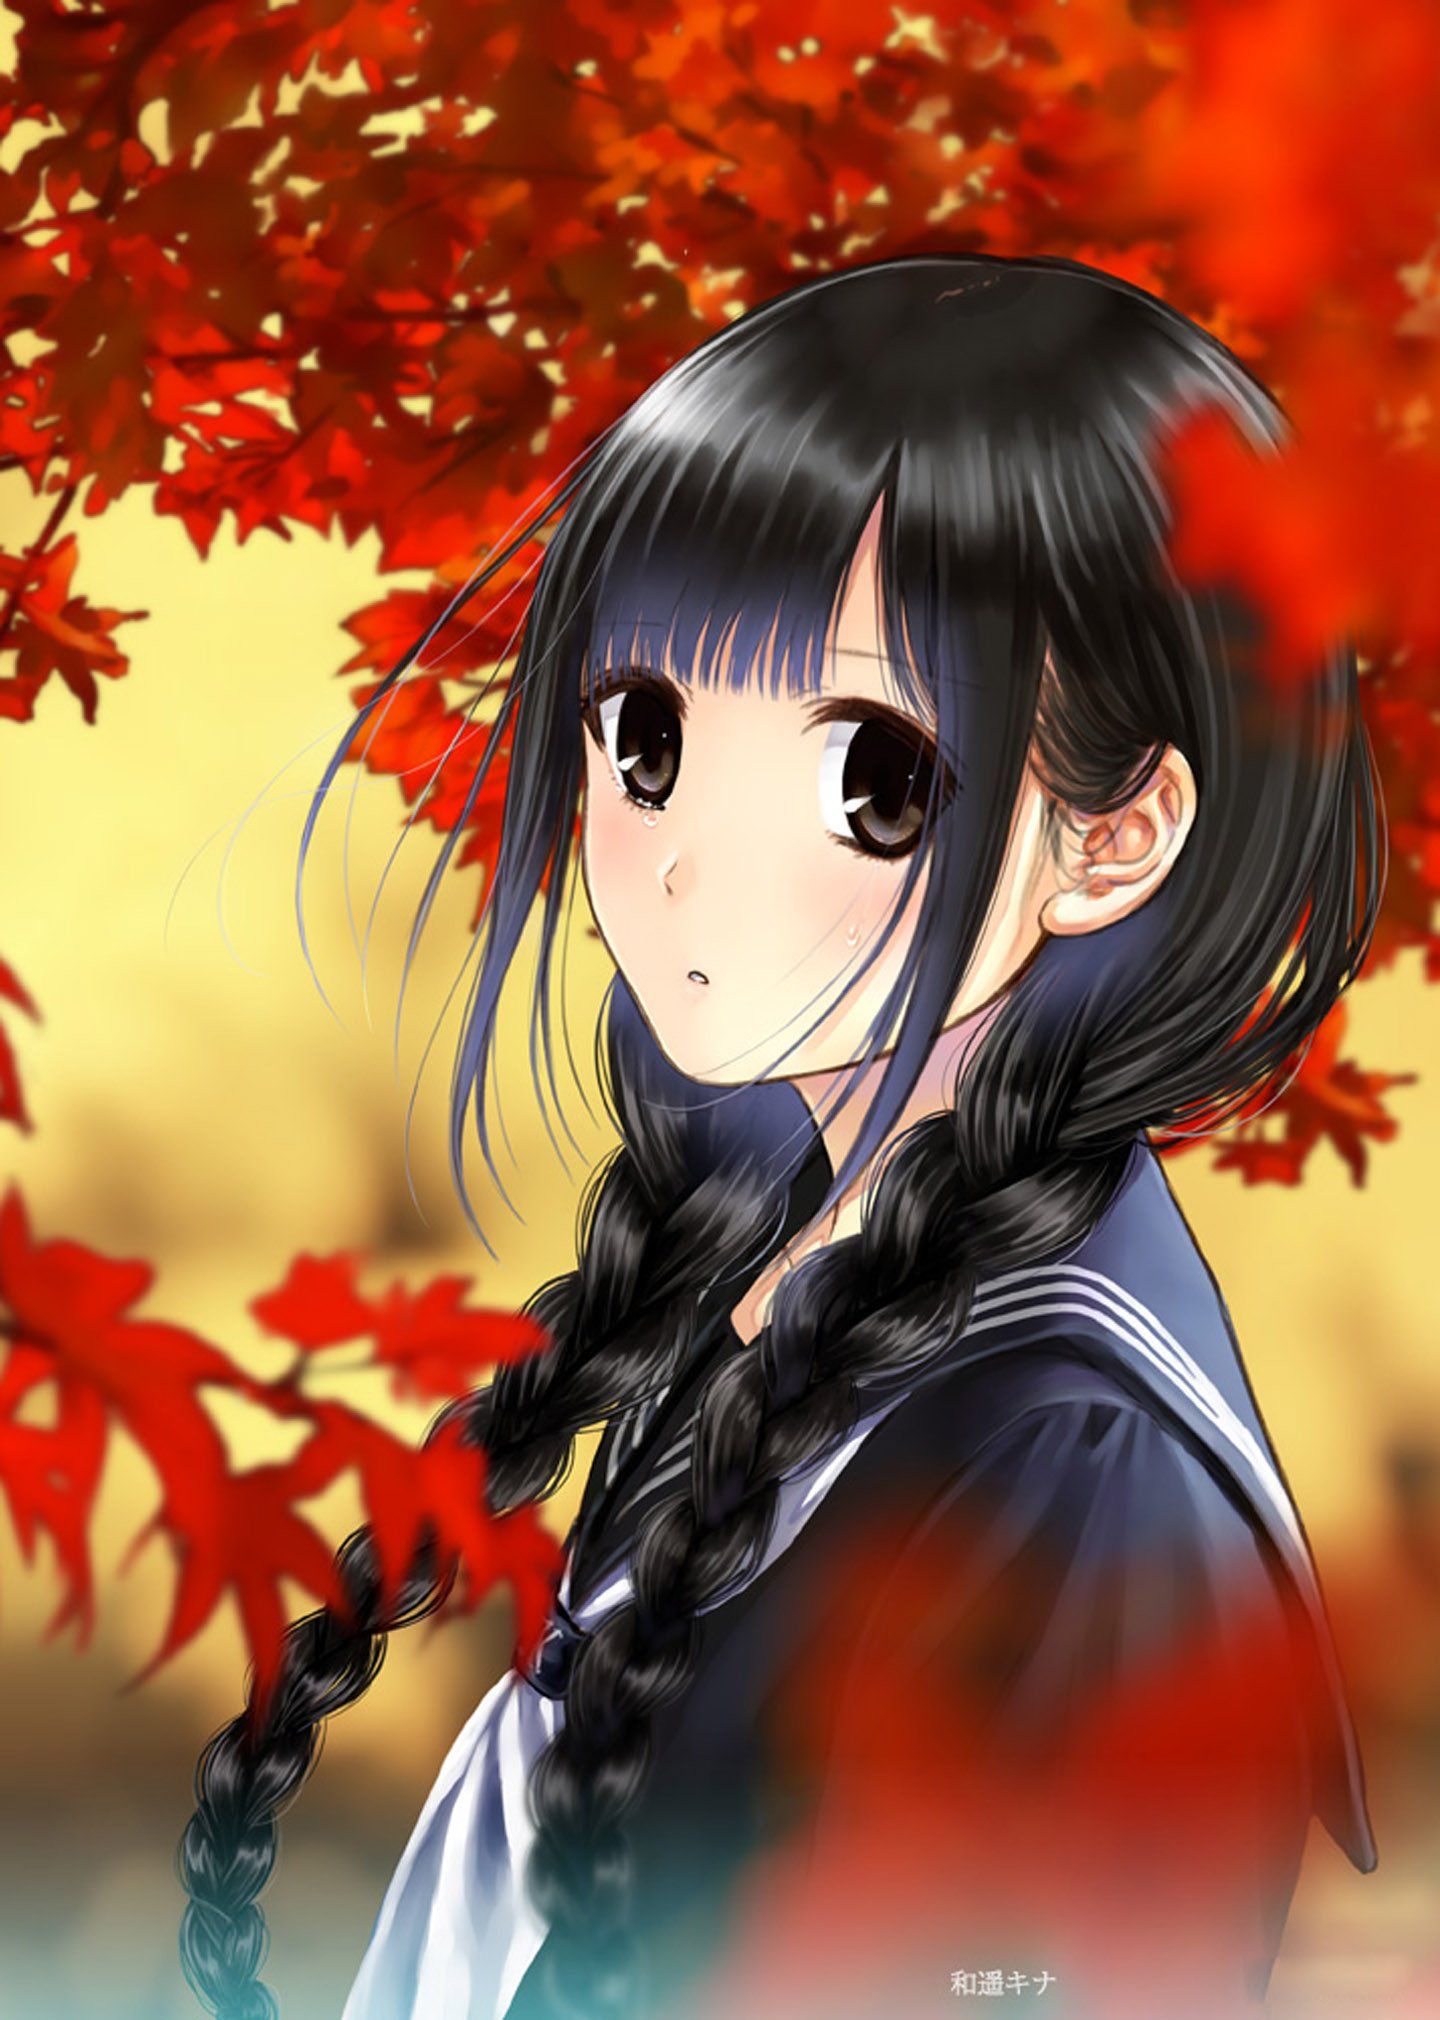 Original anime girl school uniform red leaves autumn cute beautiful dress long hair wallpaperx2020